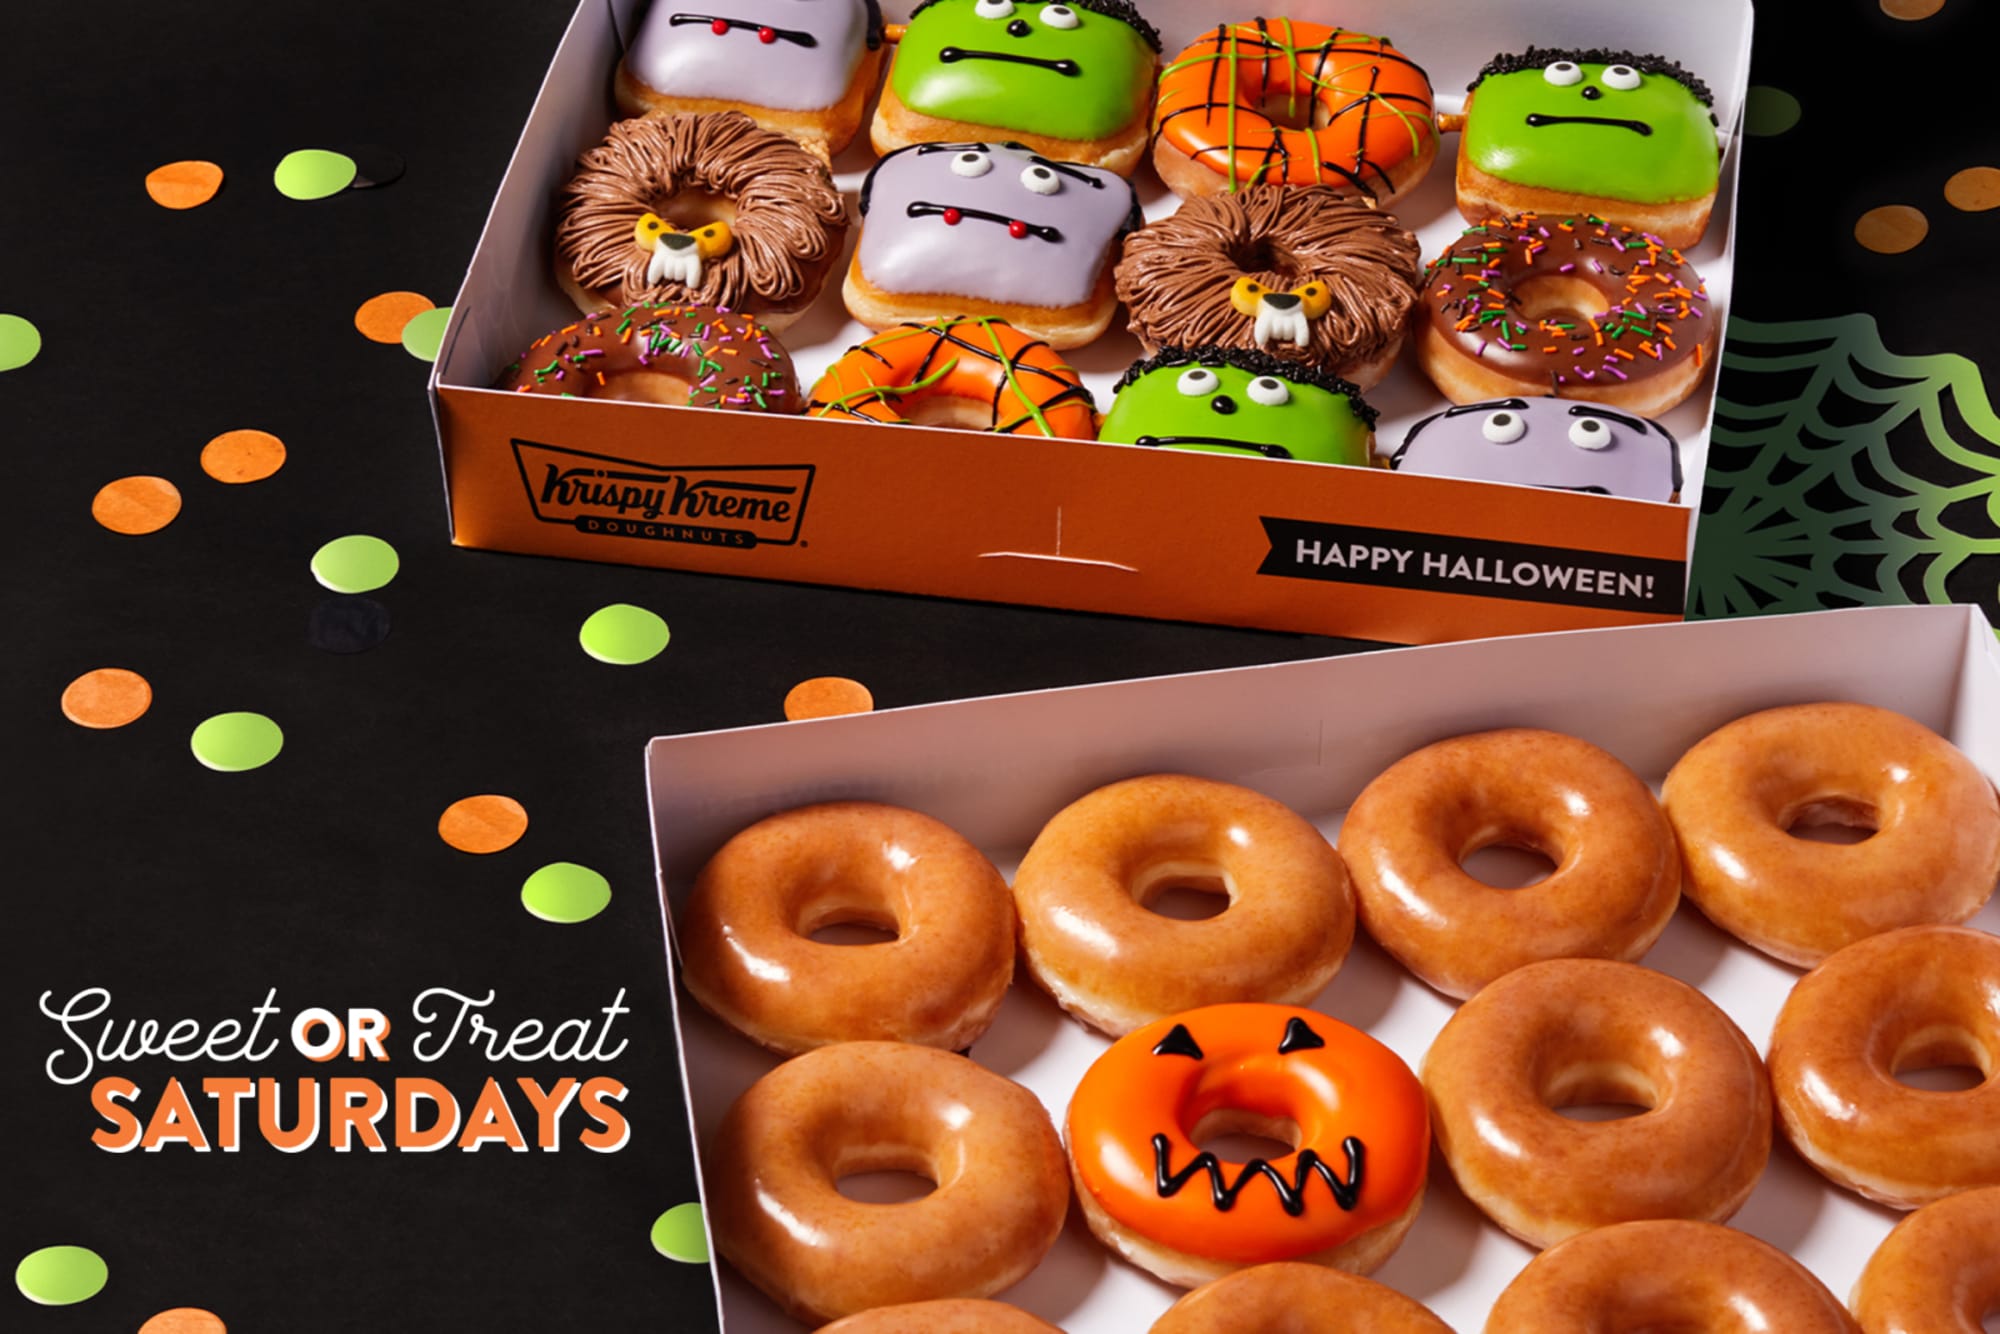 Krispy Kreme celebrating Halloween with 1 dozens and spooky doughnut